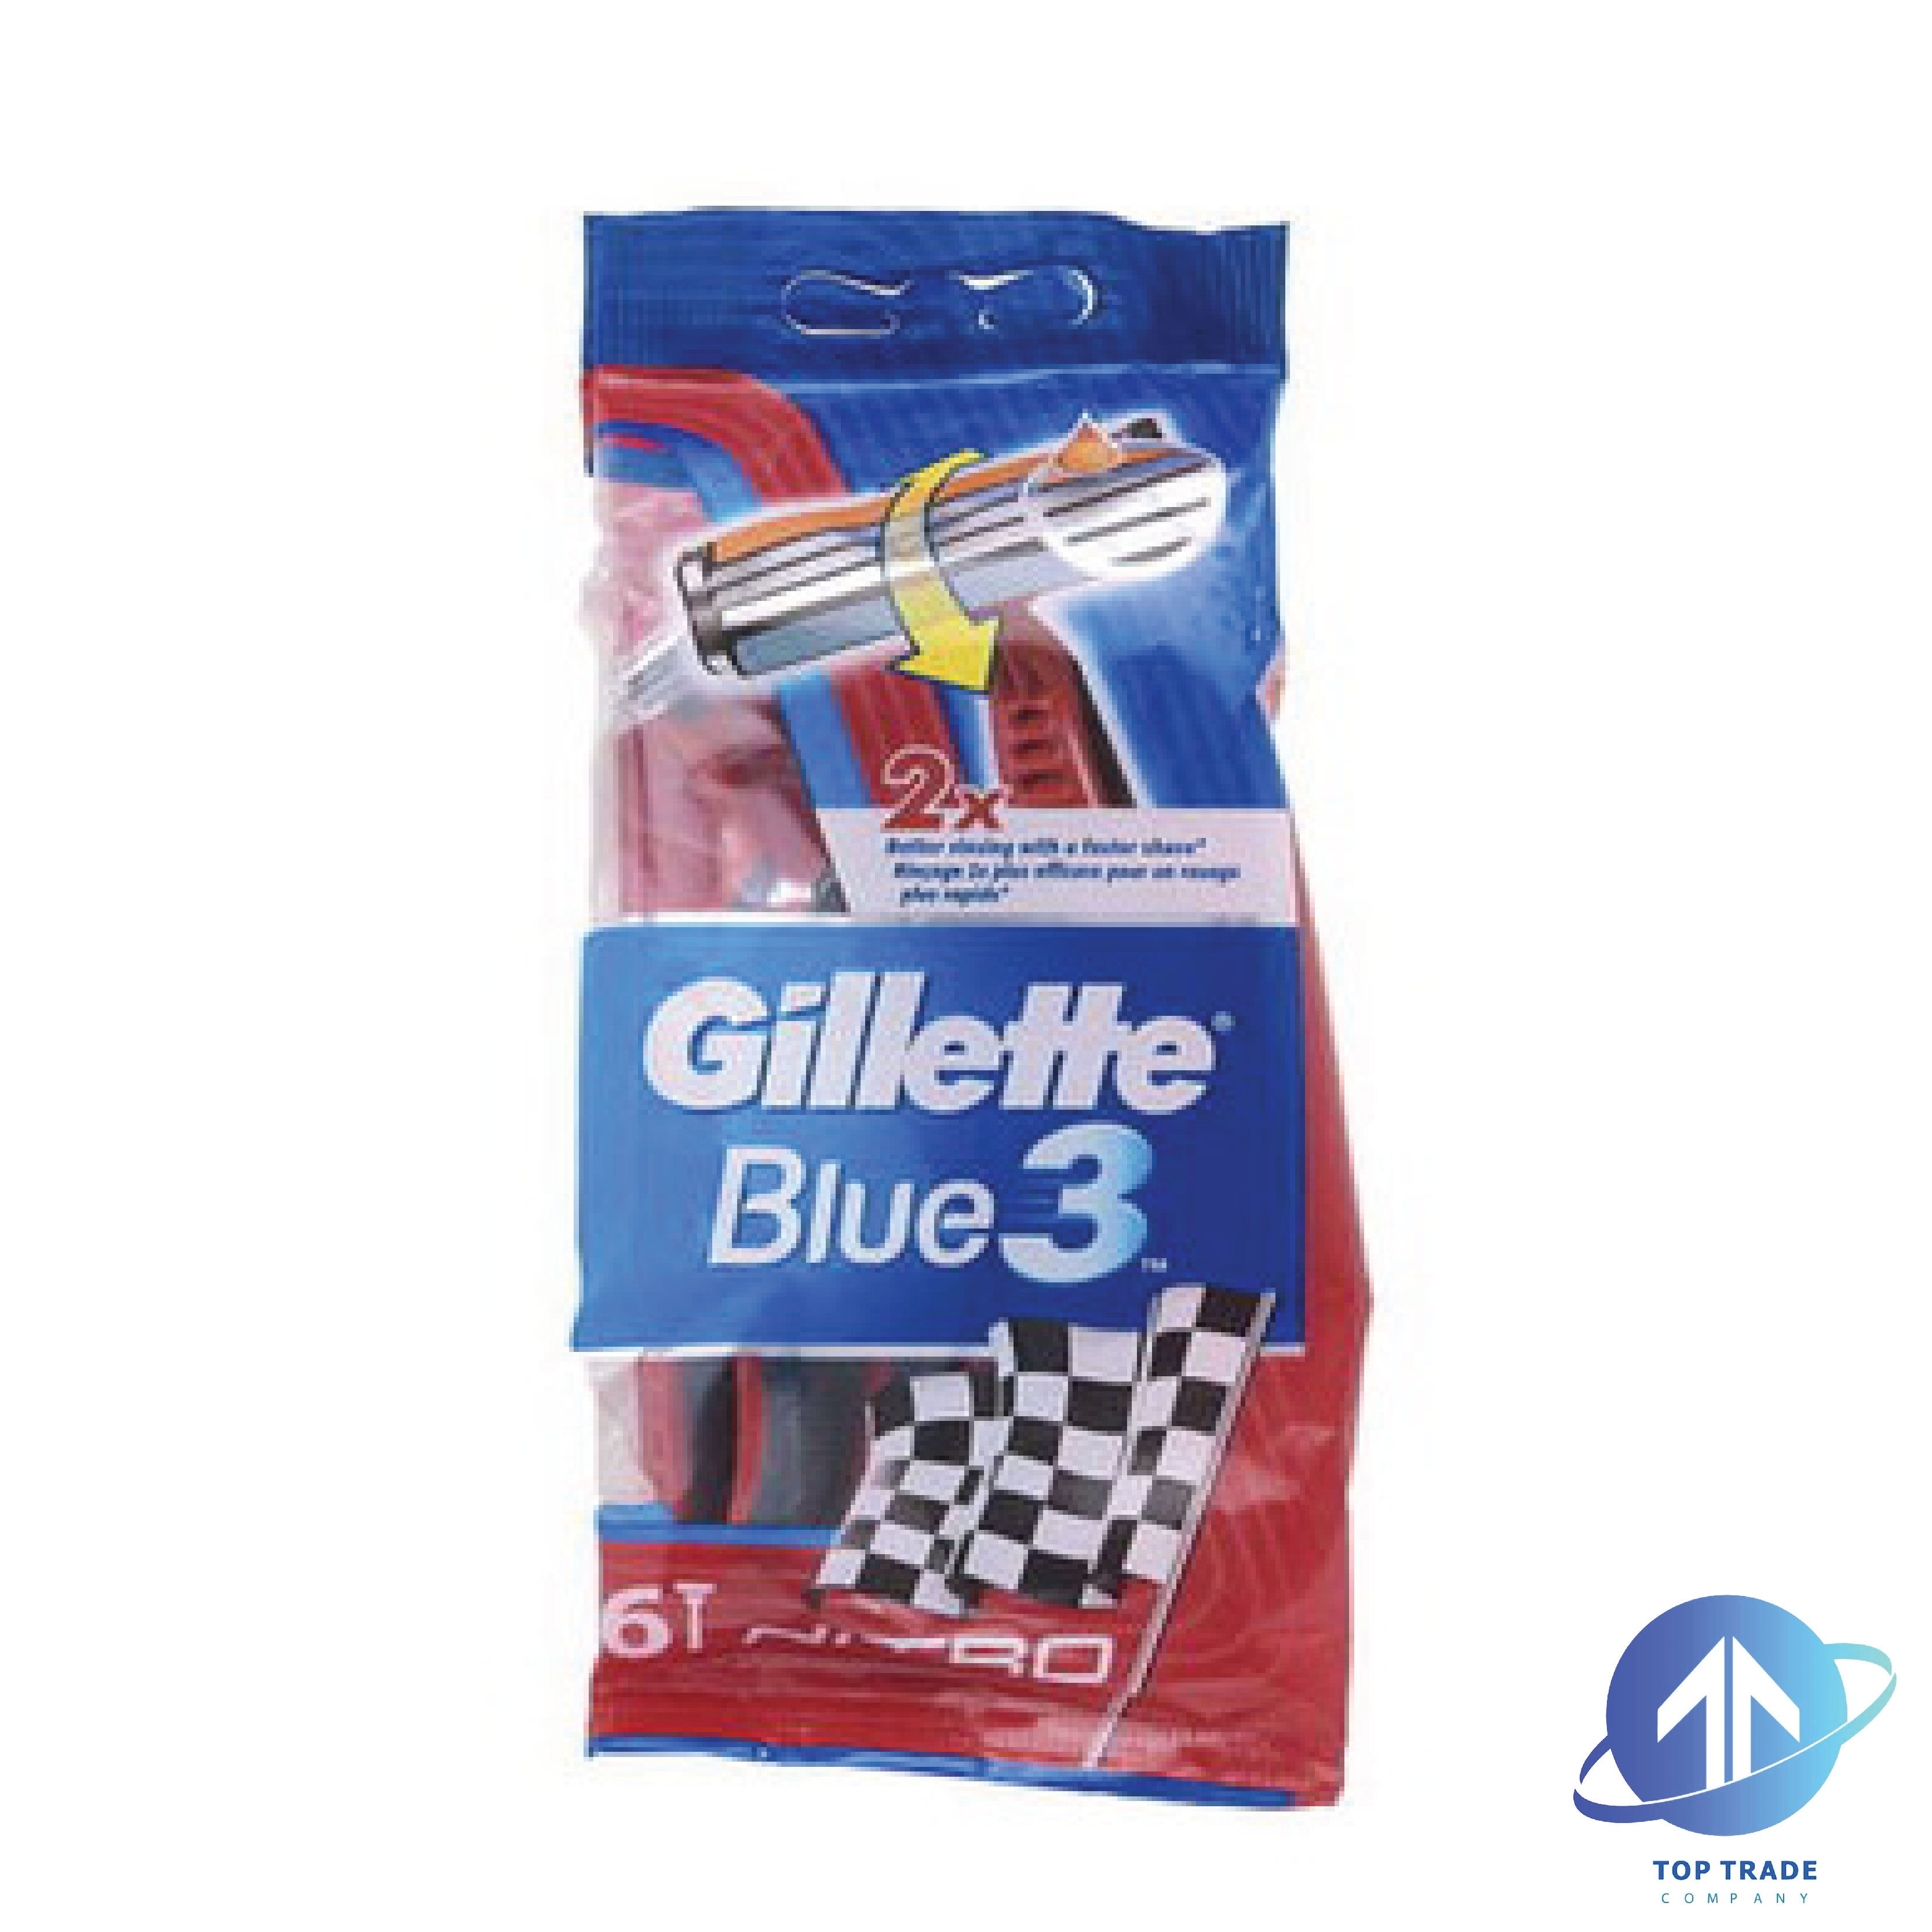 Gillette Blue III razor blades nitro razor 6pcs